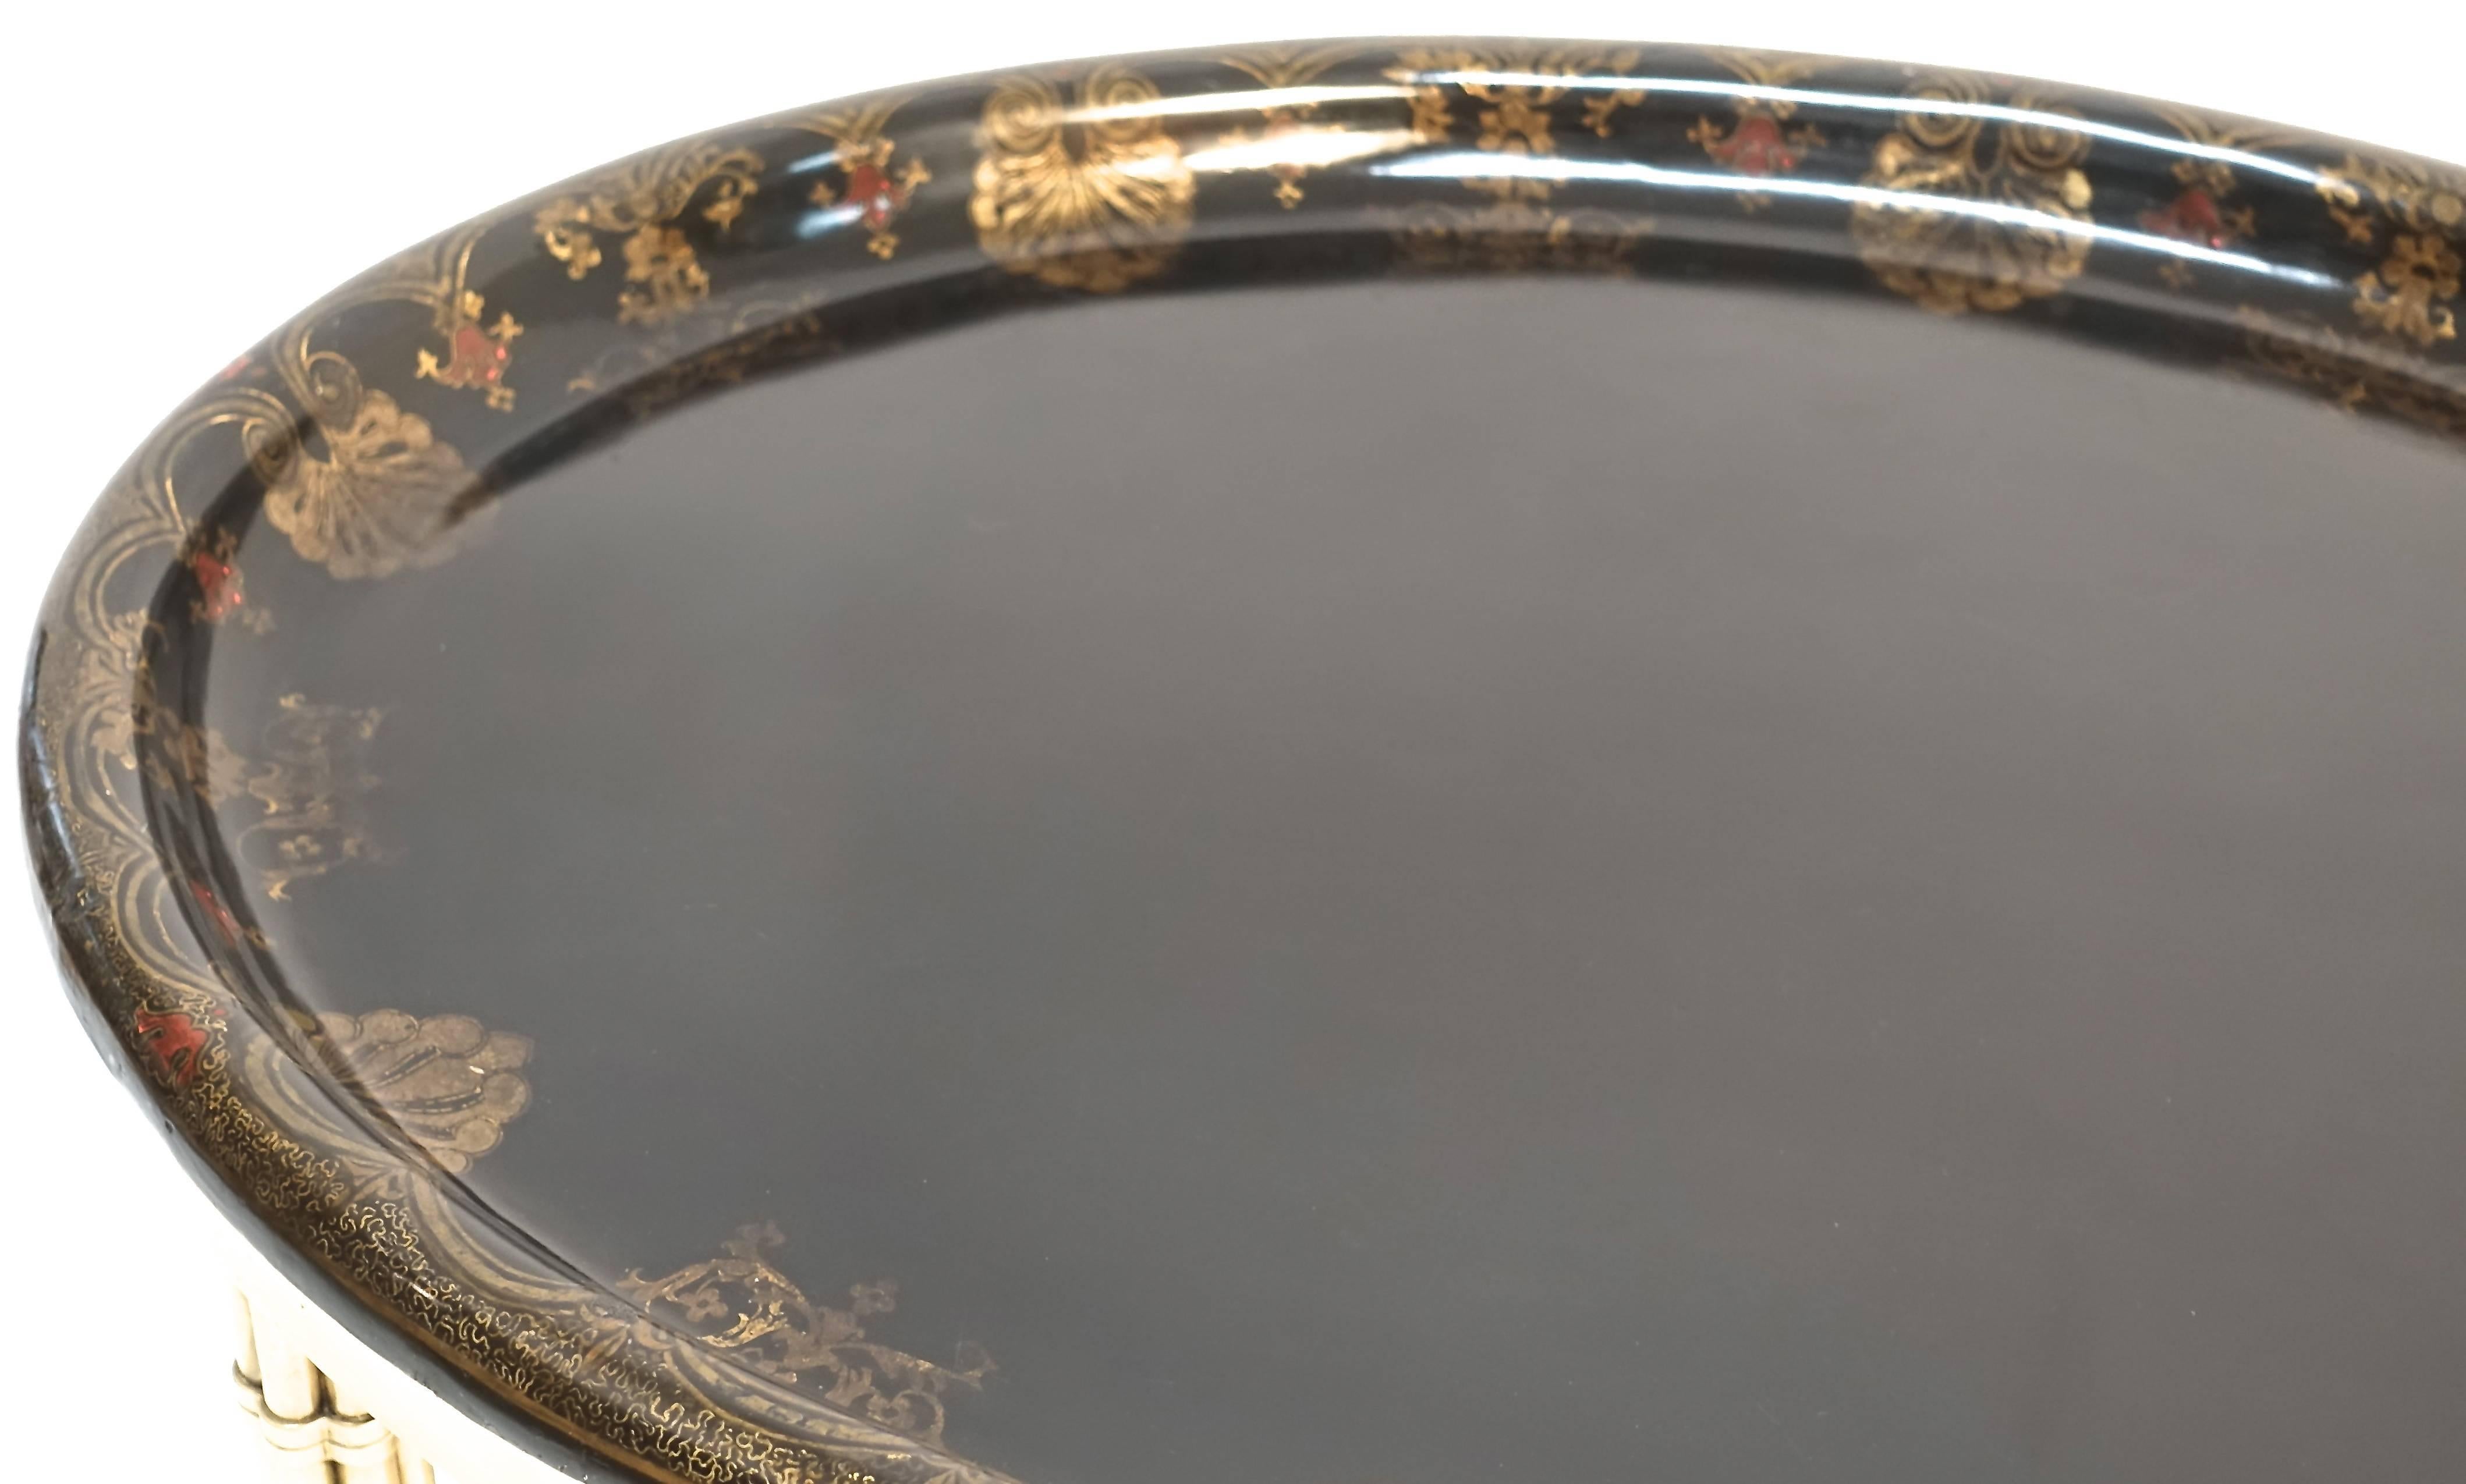 Regency Large 19th Century Black Oval Papier Mâché Tray Coffee Table, English